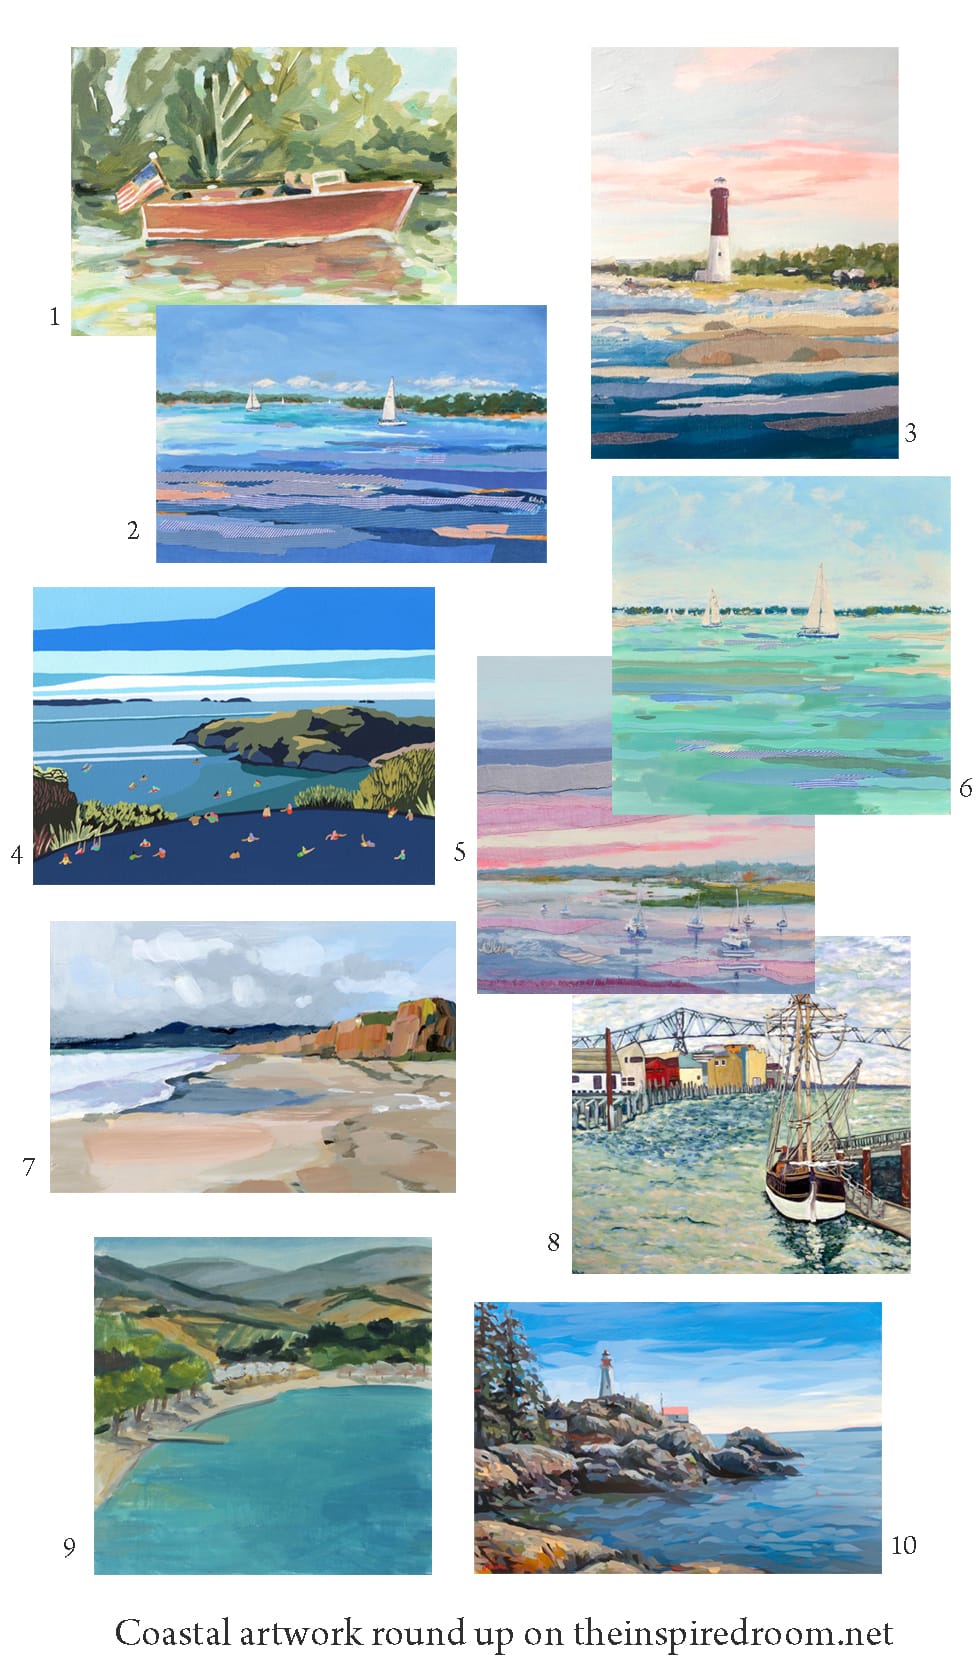 Where to Find Coastal / Sailboat / Seascape Artwork: Favorite Sources